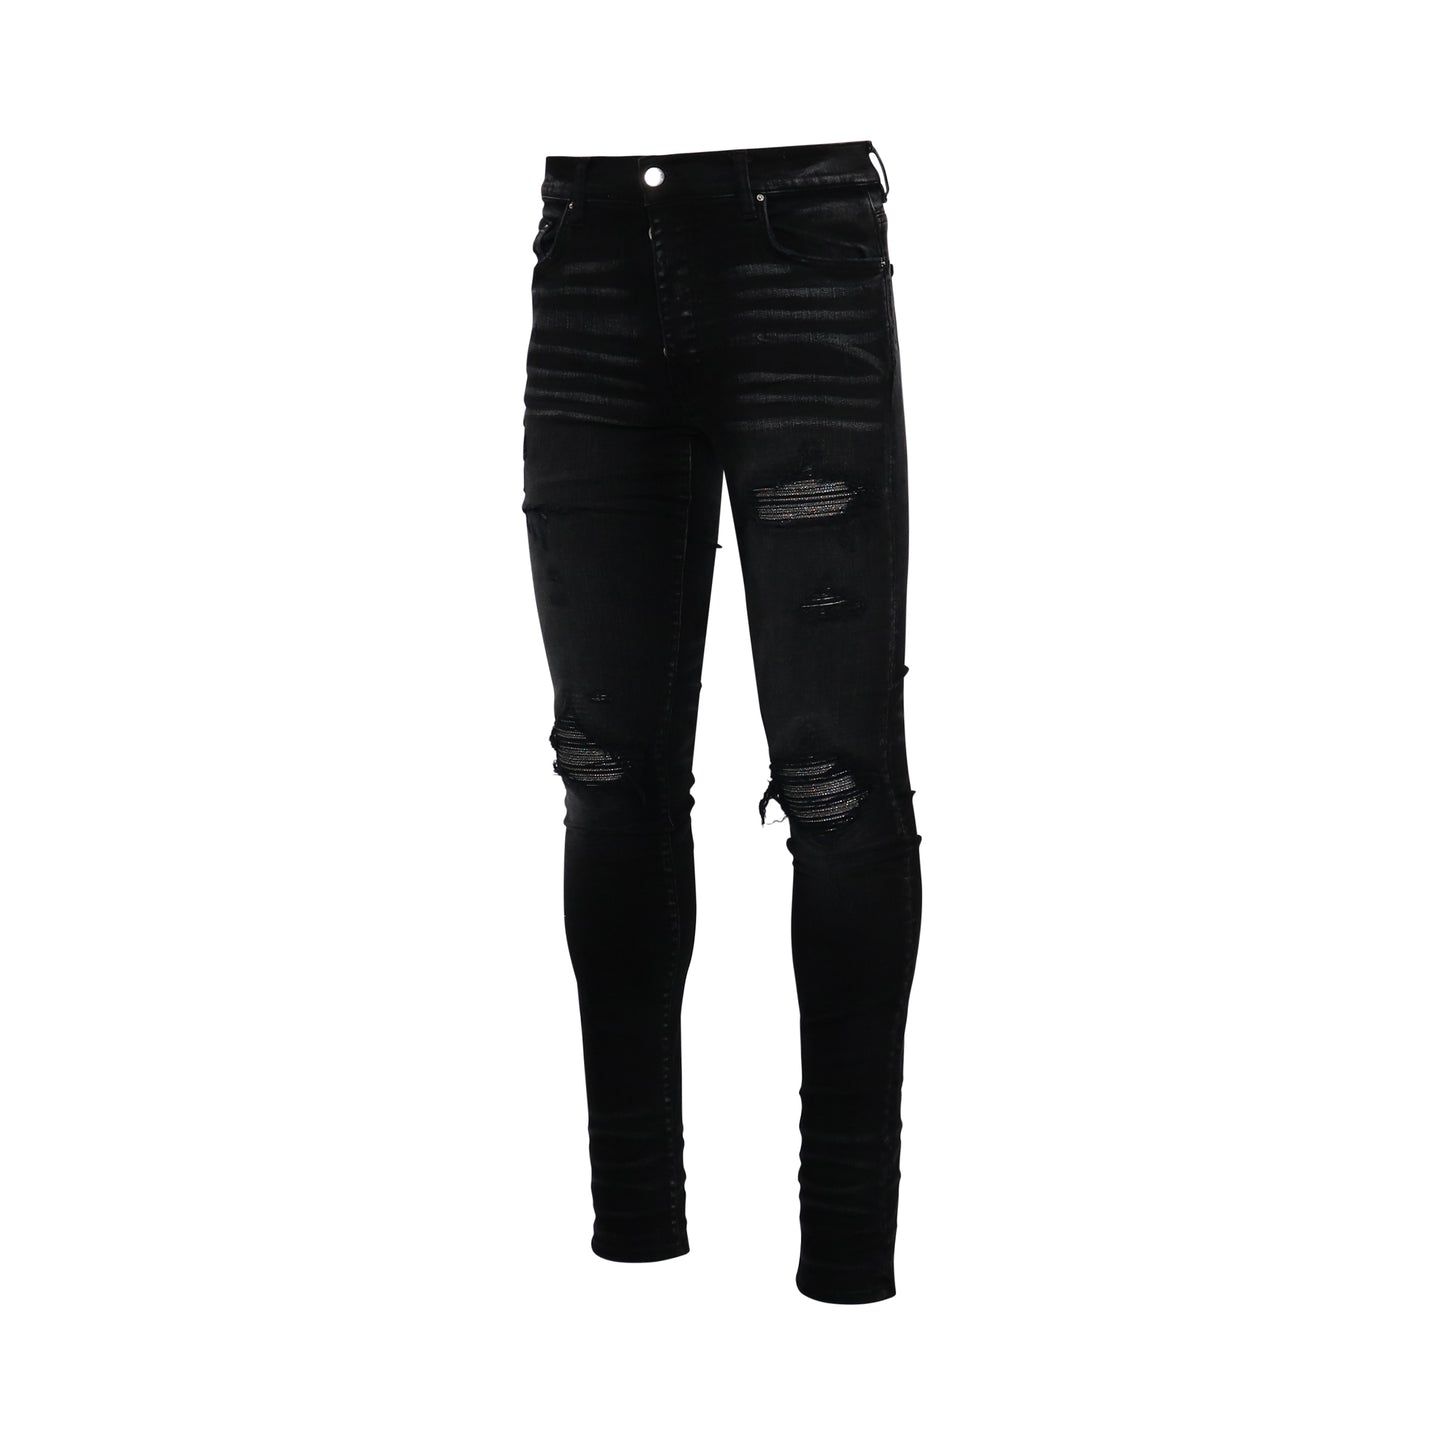 Mx1 Iridecent Jeans in Black